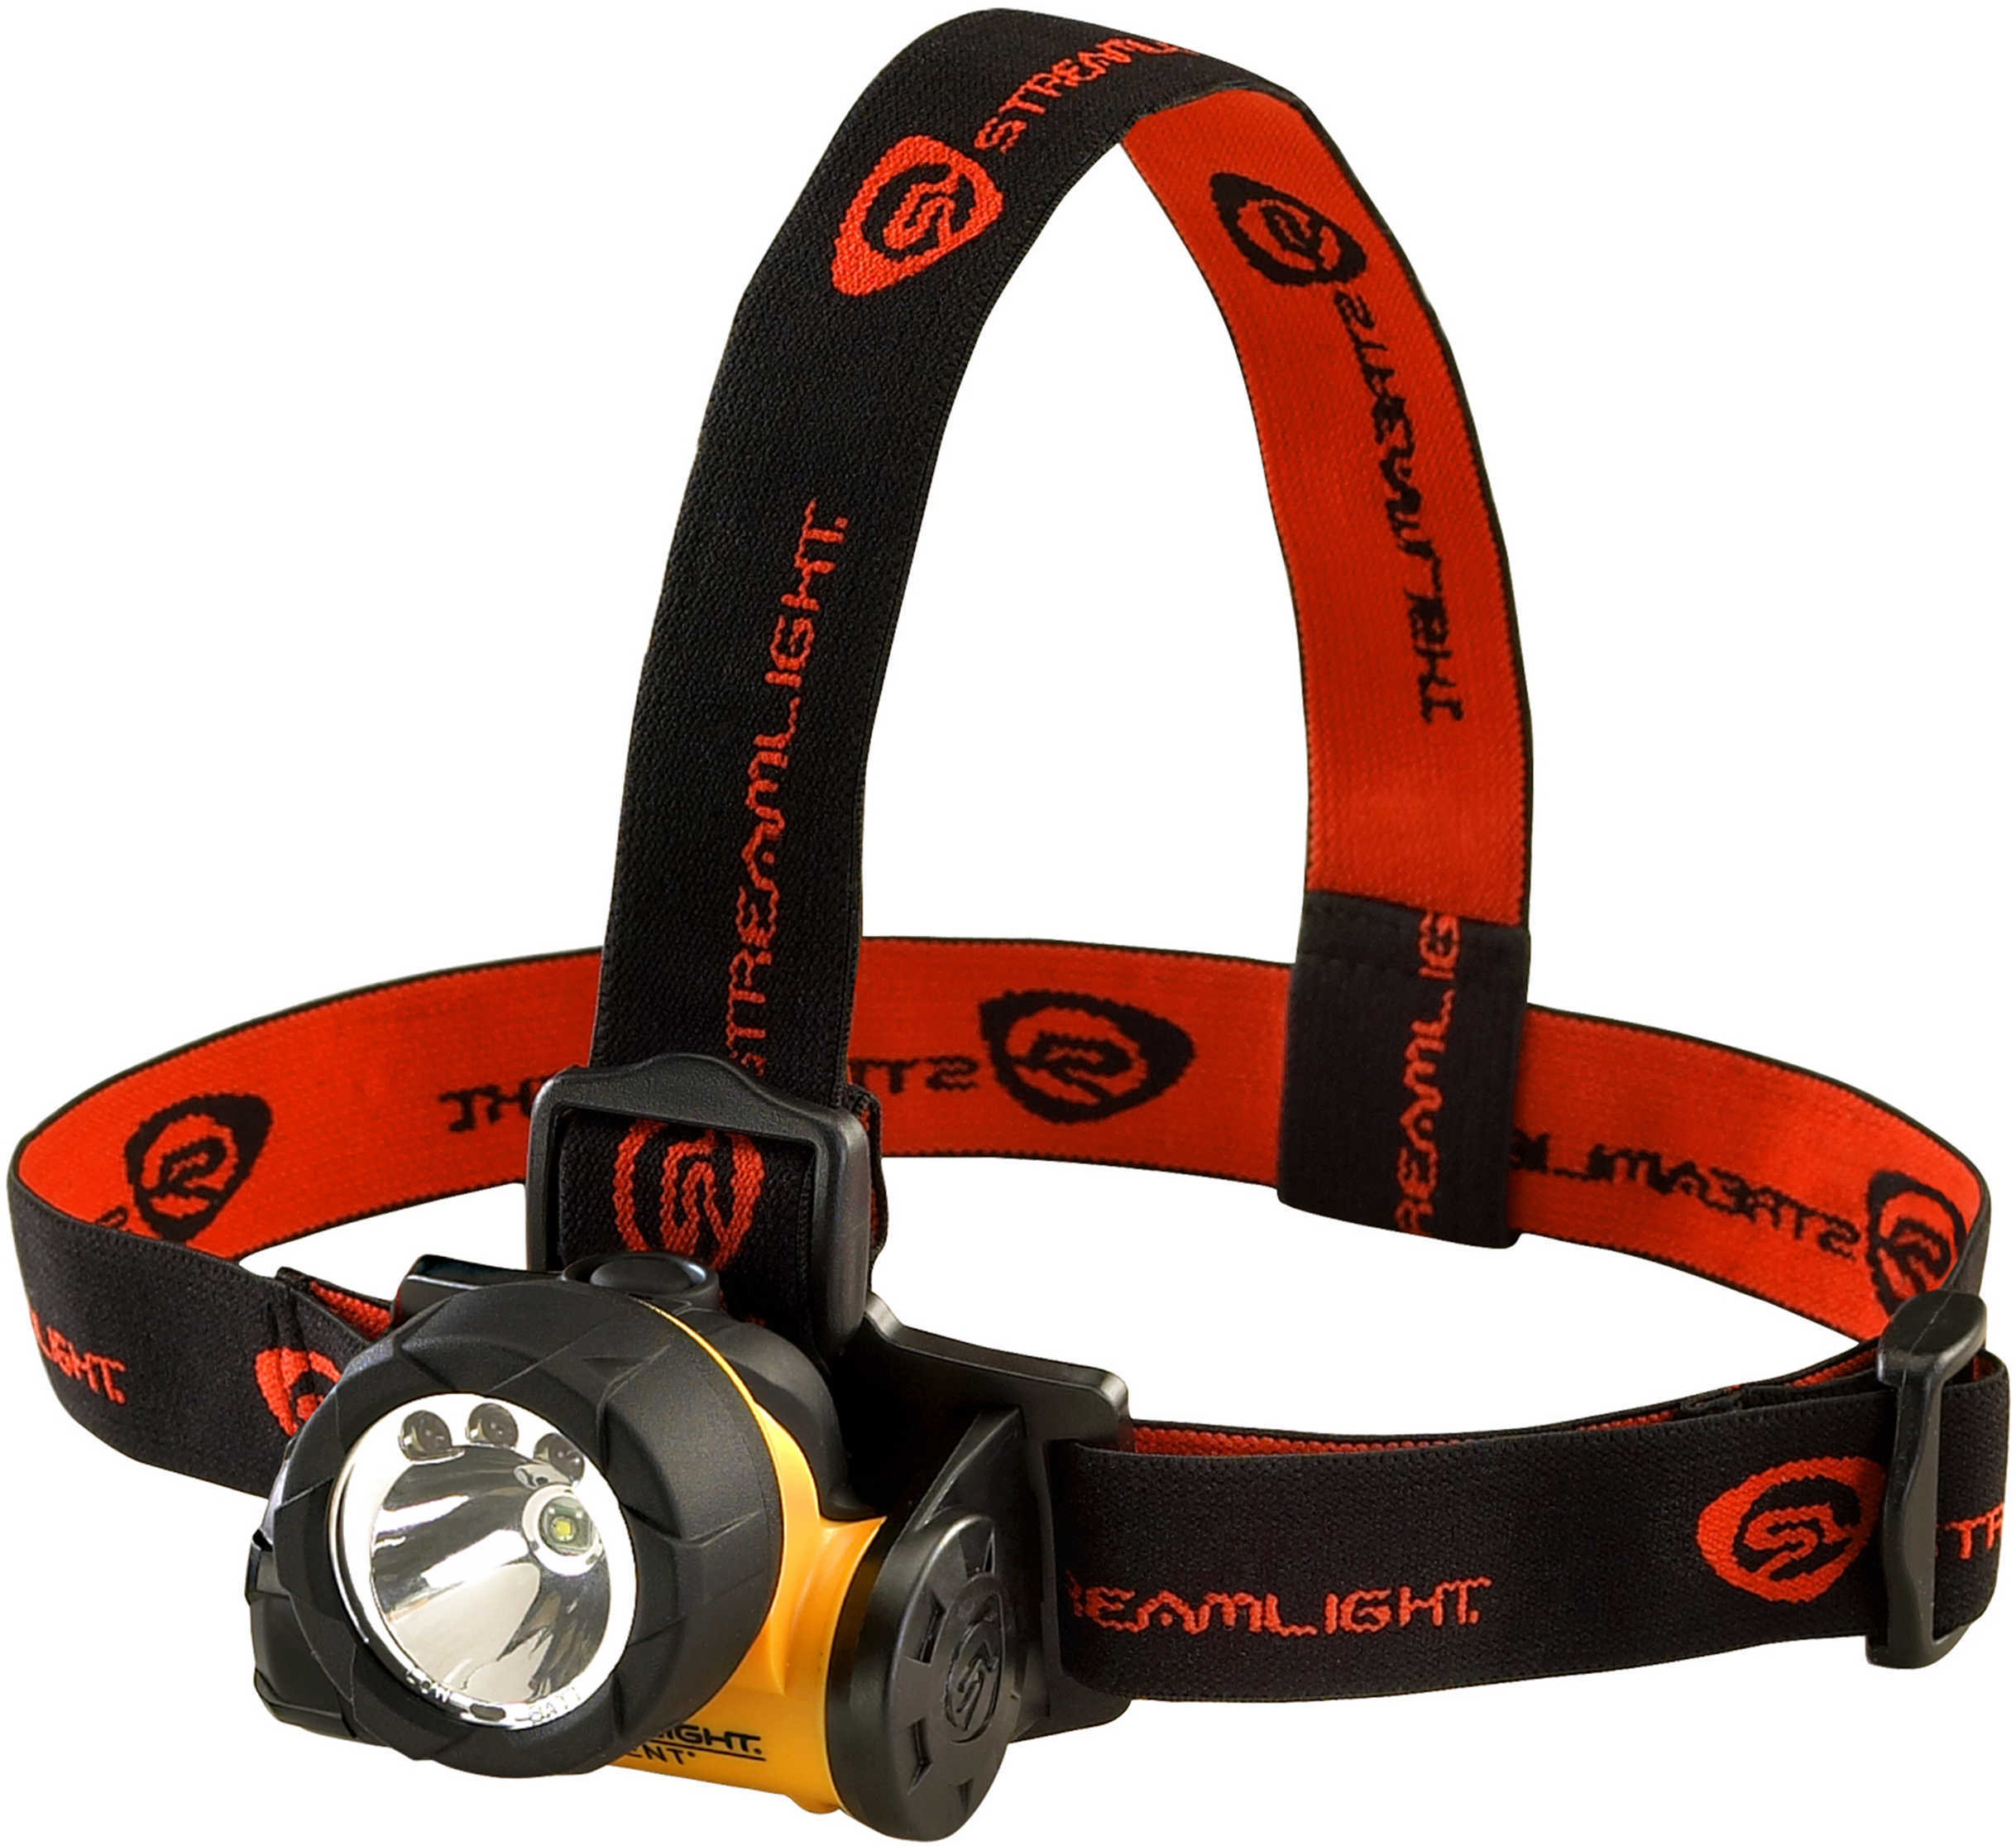 Streamlight Trident Headlight 3 White LEDs (Batteries Included) 61050